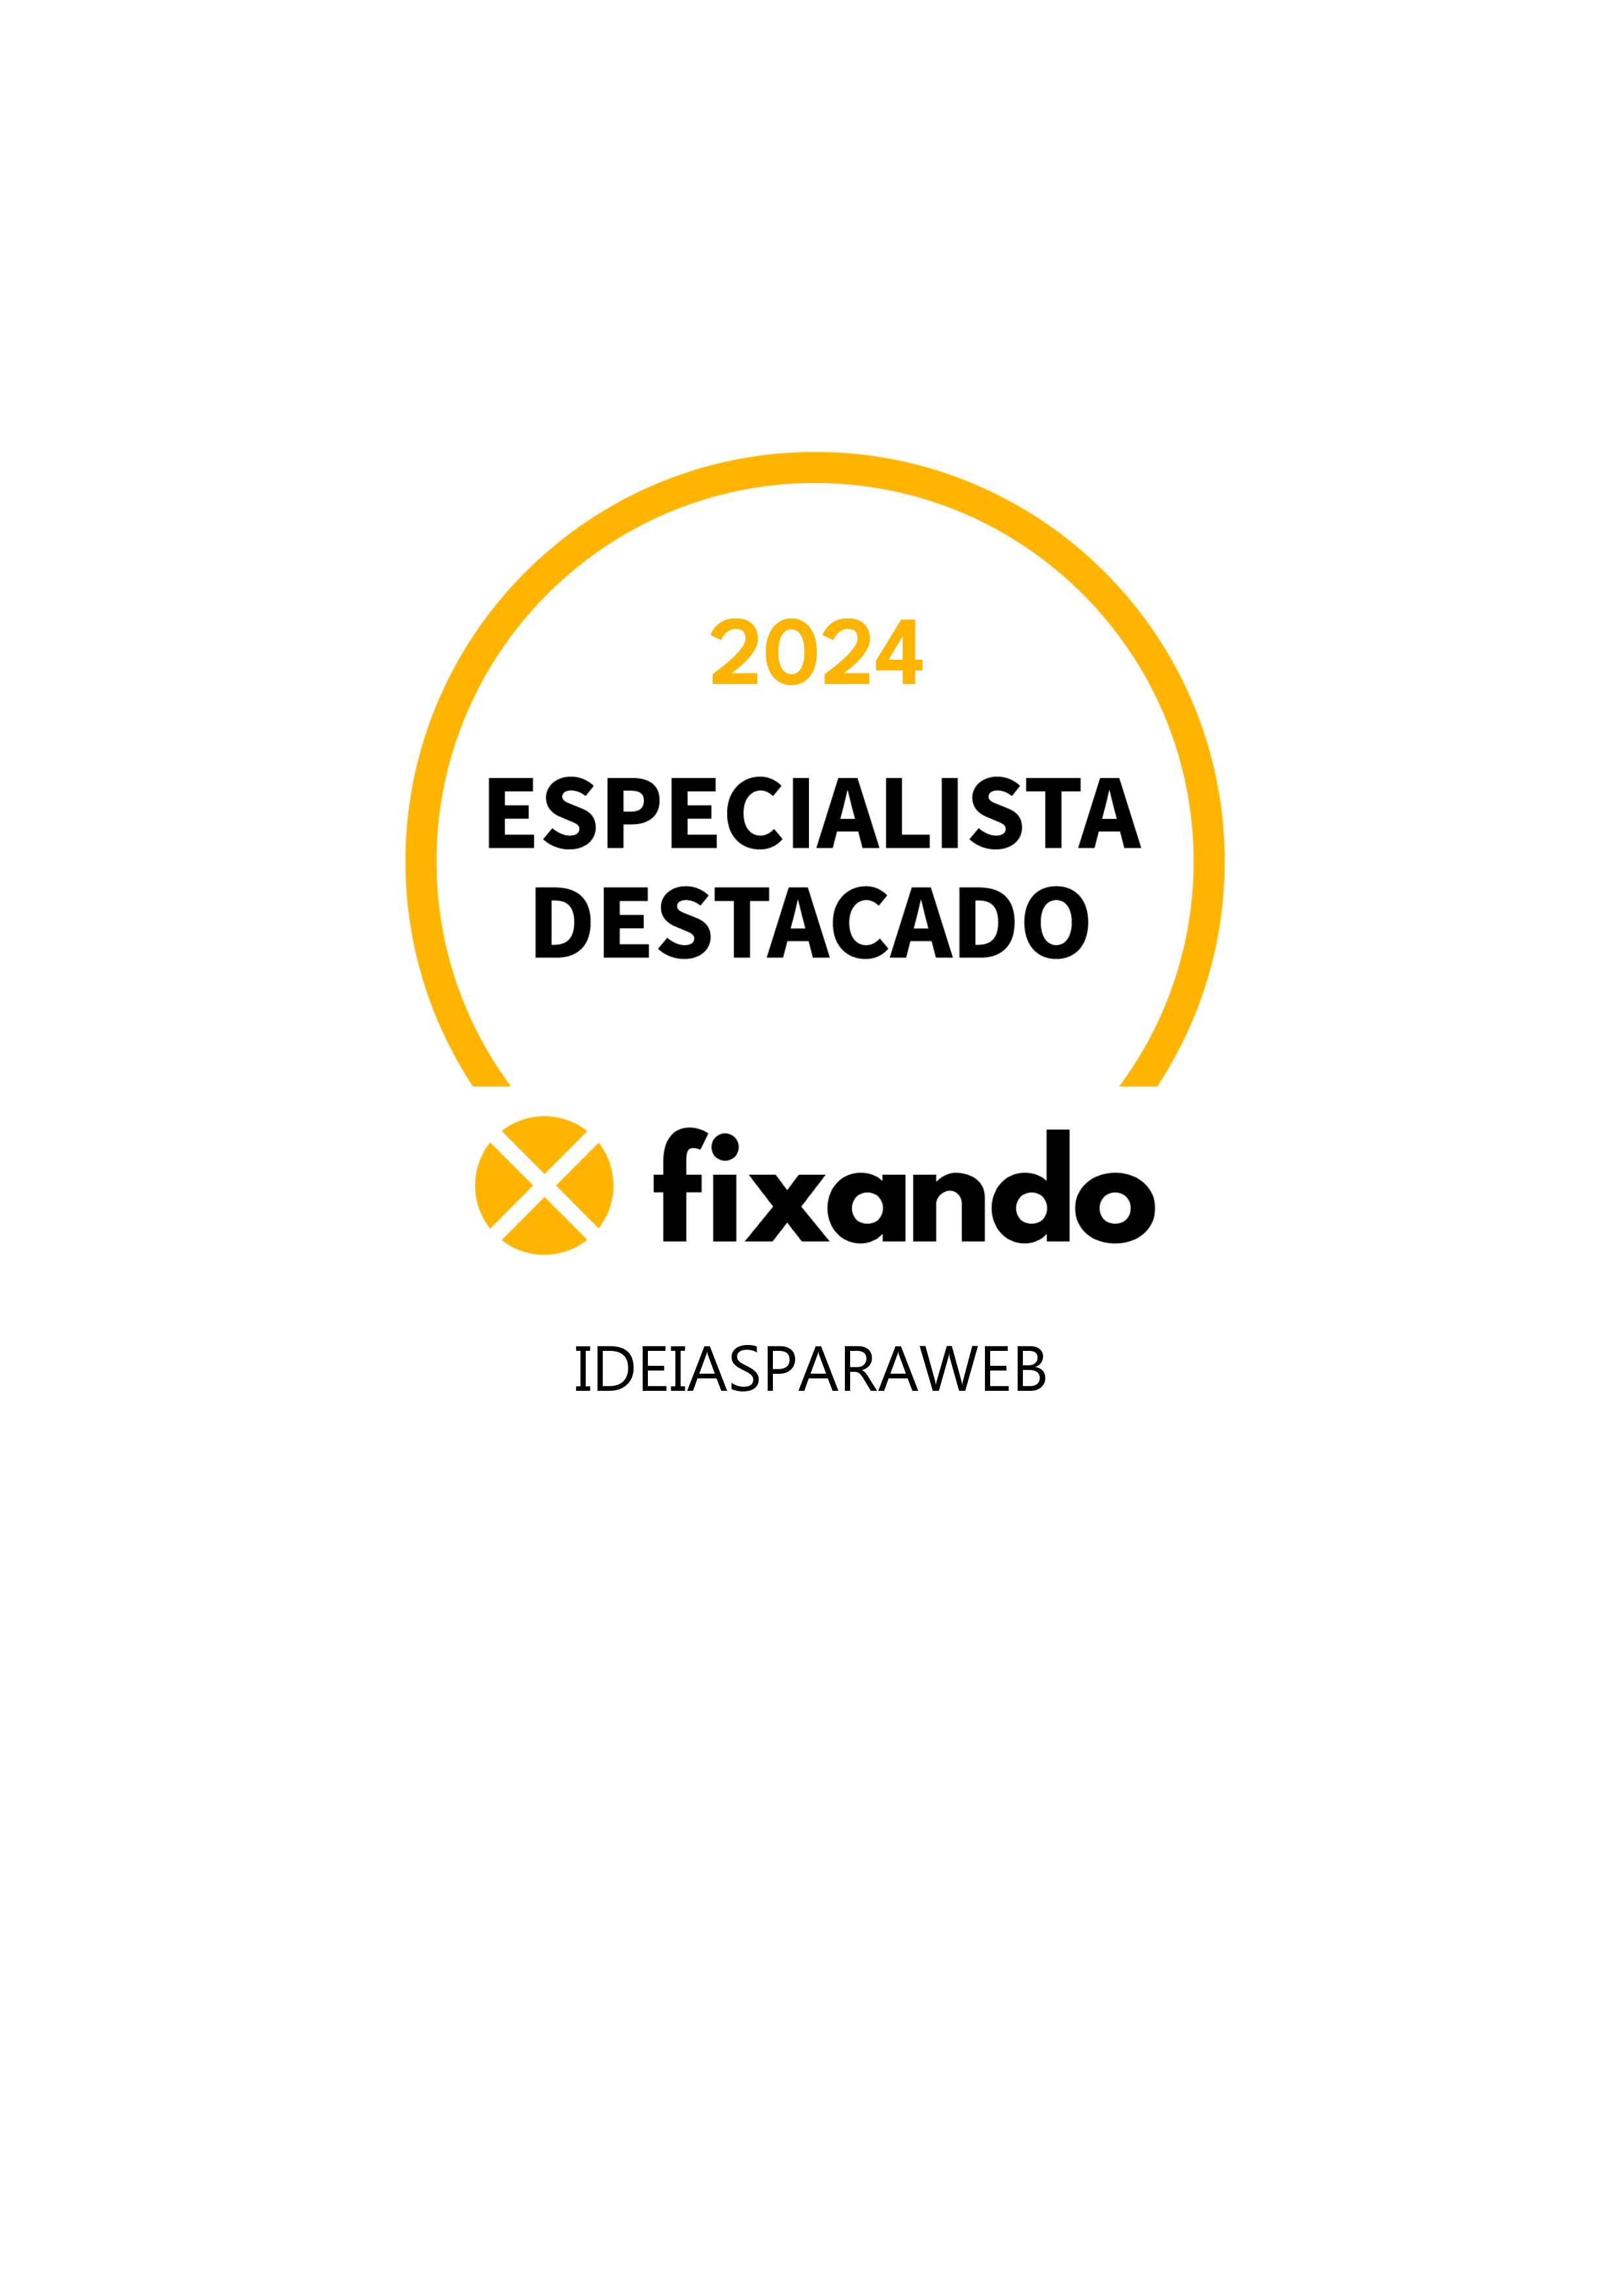 ideiasparaweb - Vila Nova de Gaia - Web Design